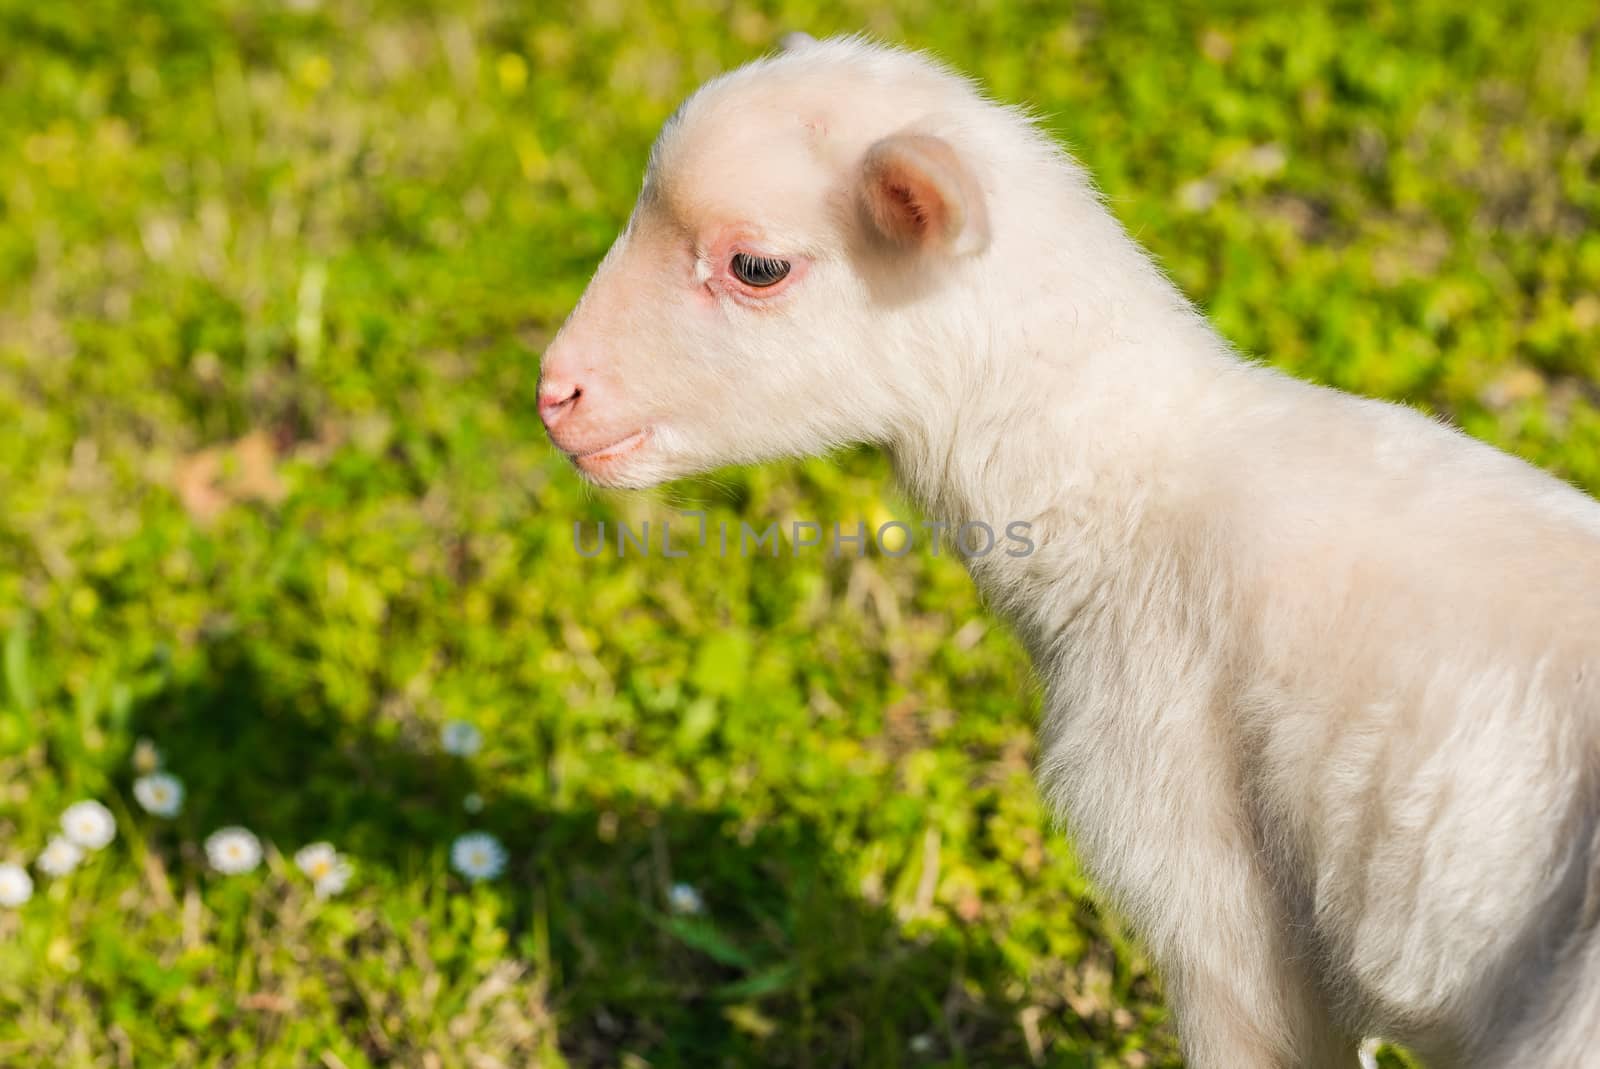 Newborn lamb on pasture at spring by Vulcano